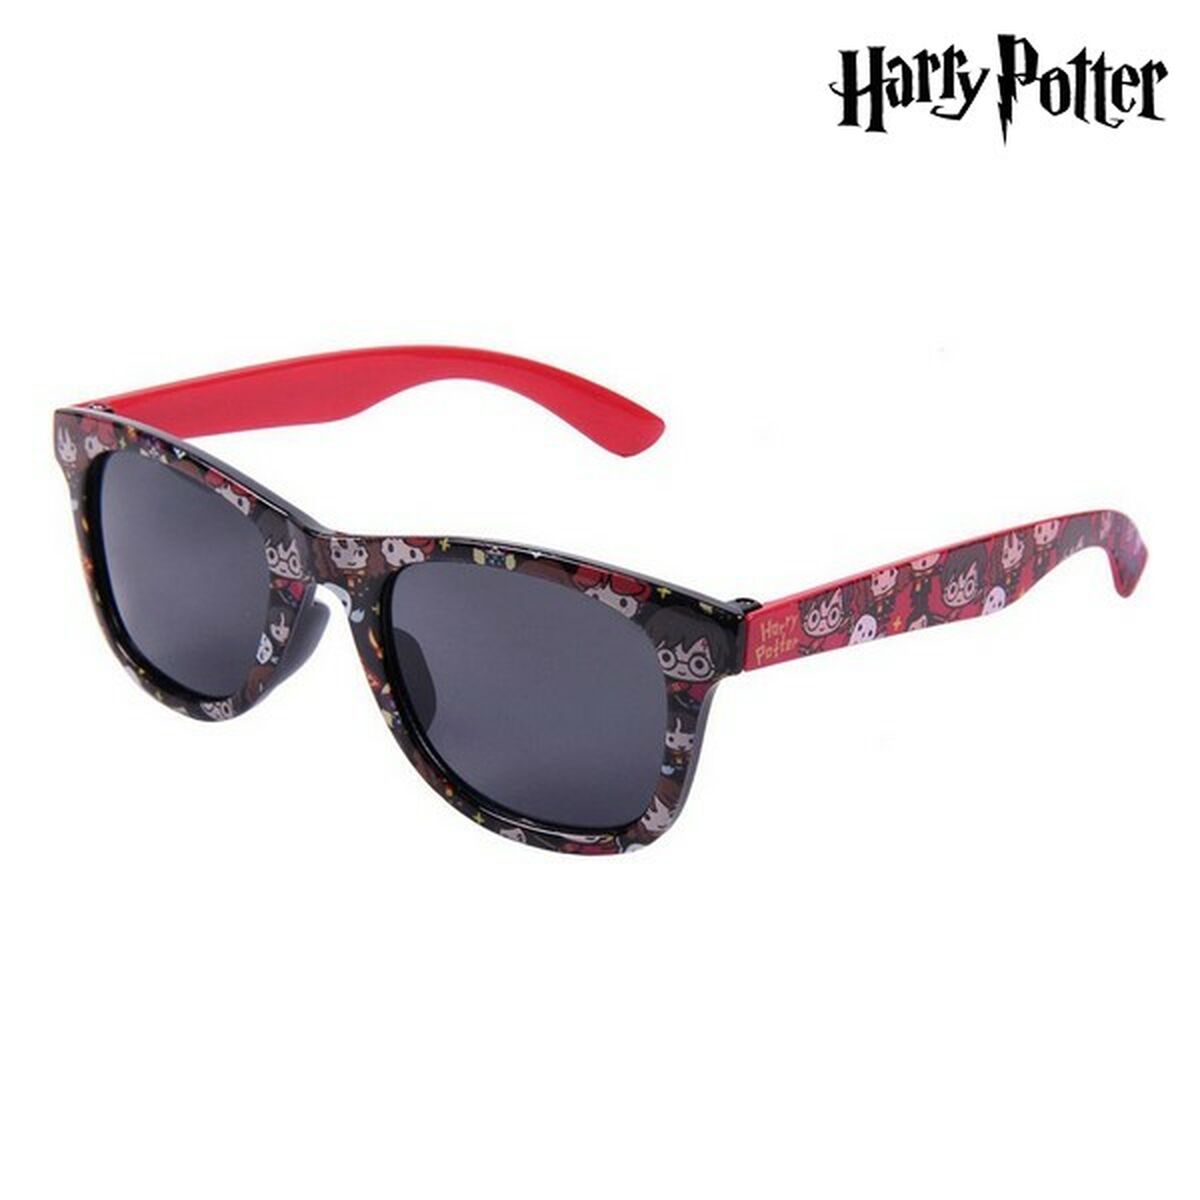 Kindersonnenbrille Harry Potter Schwarz